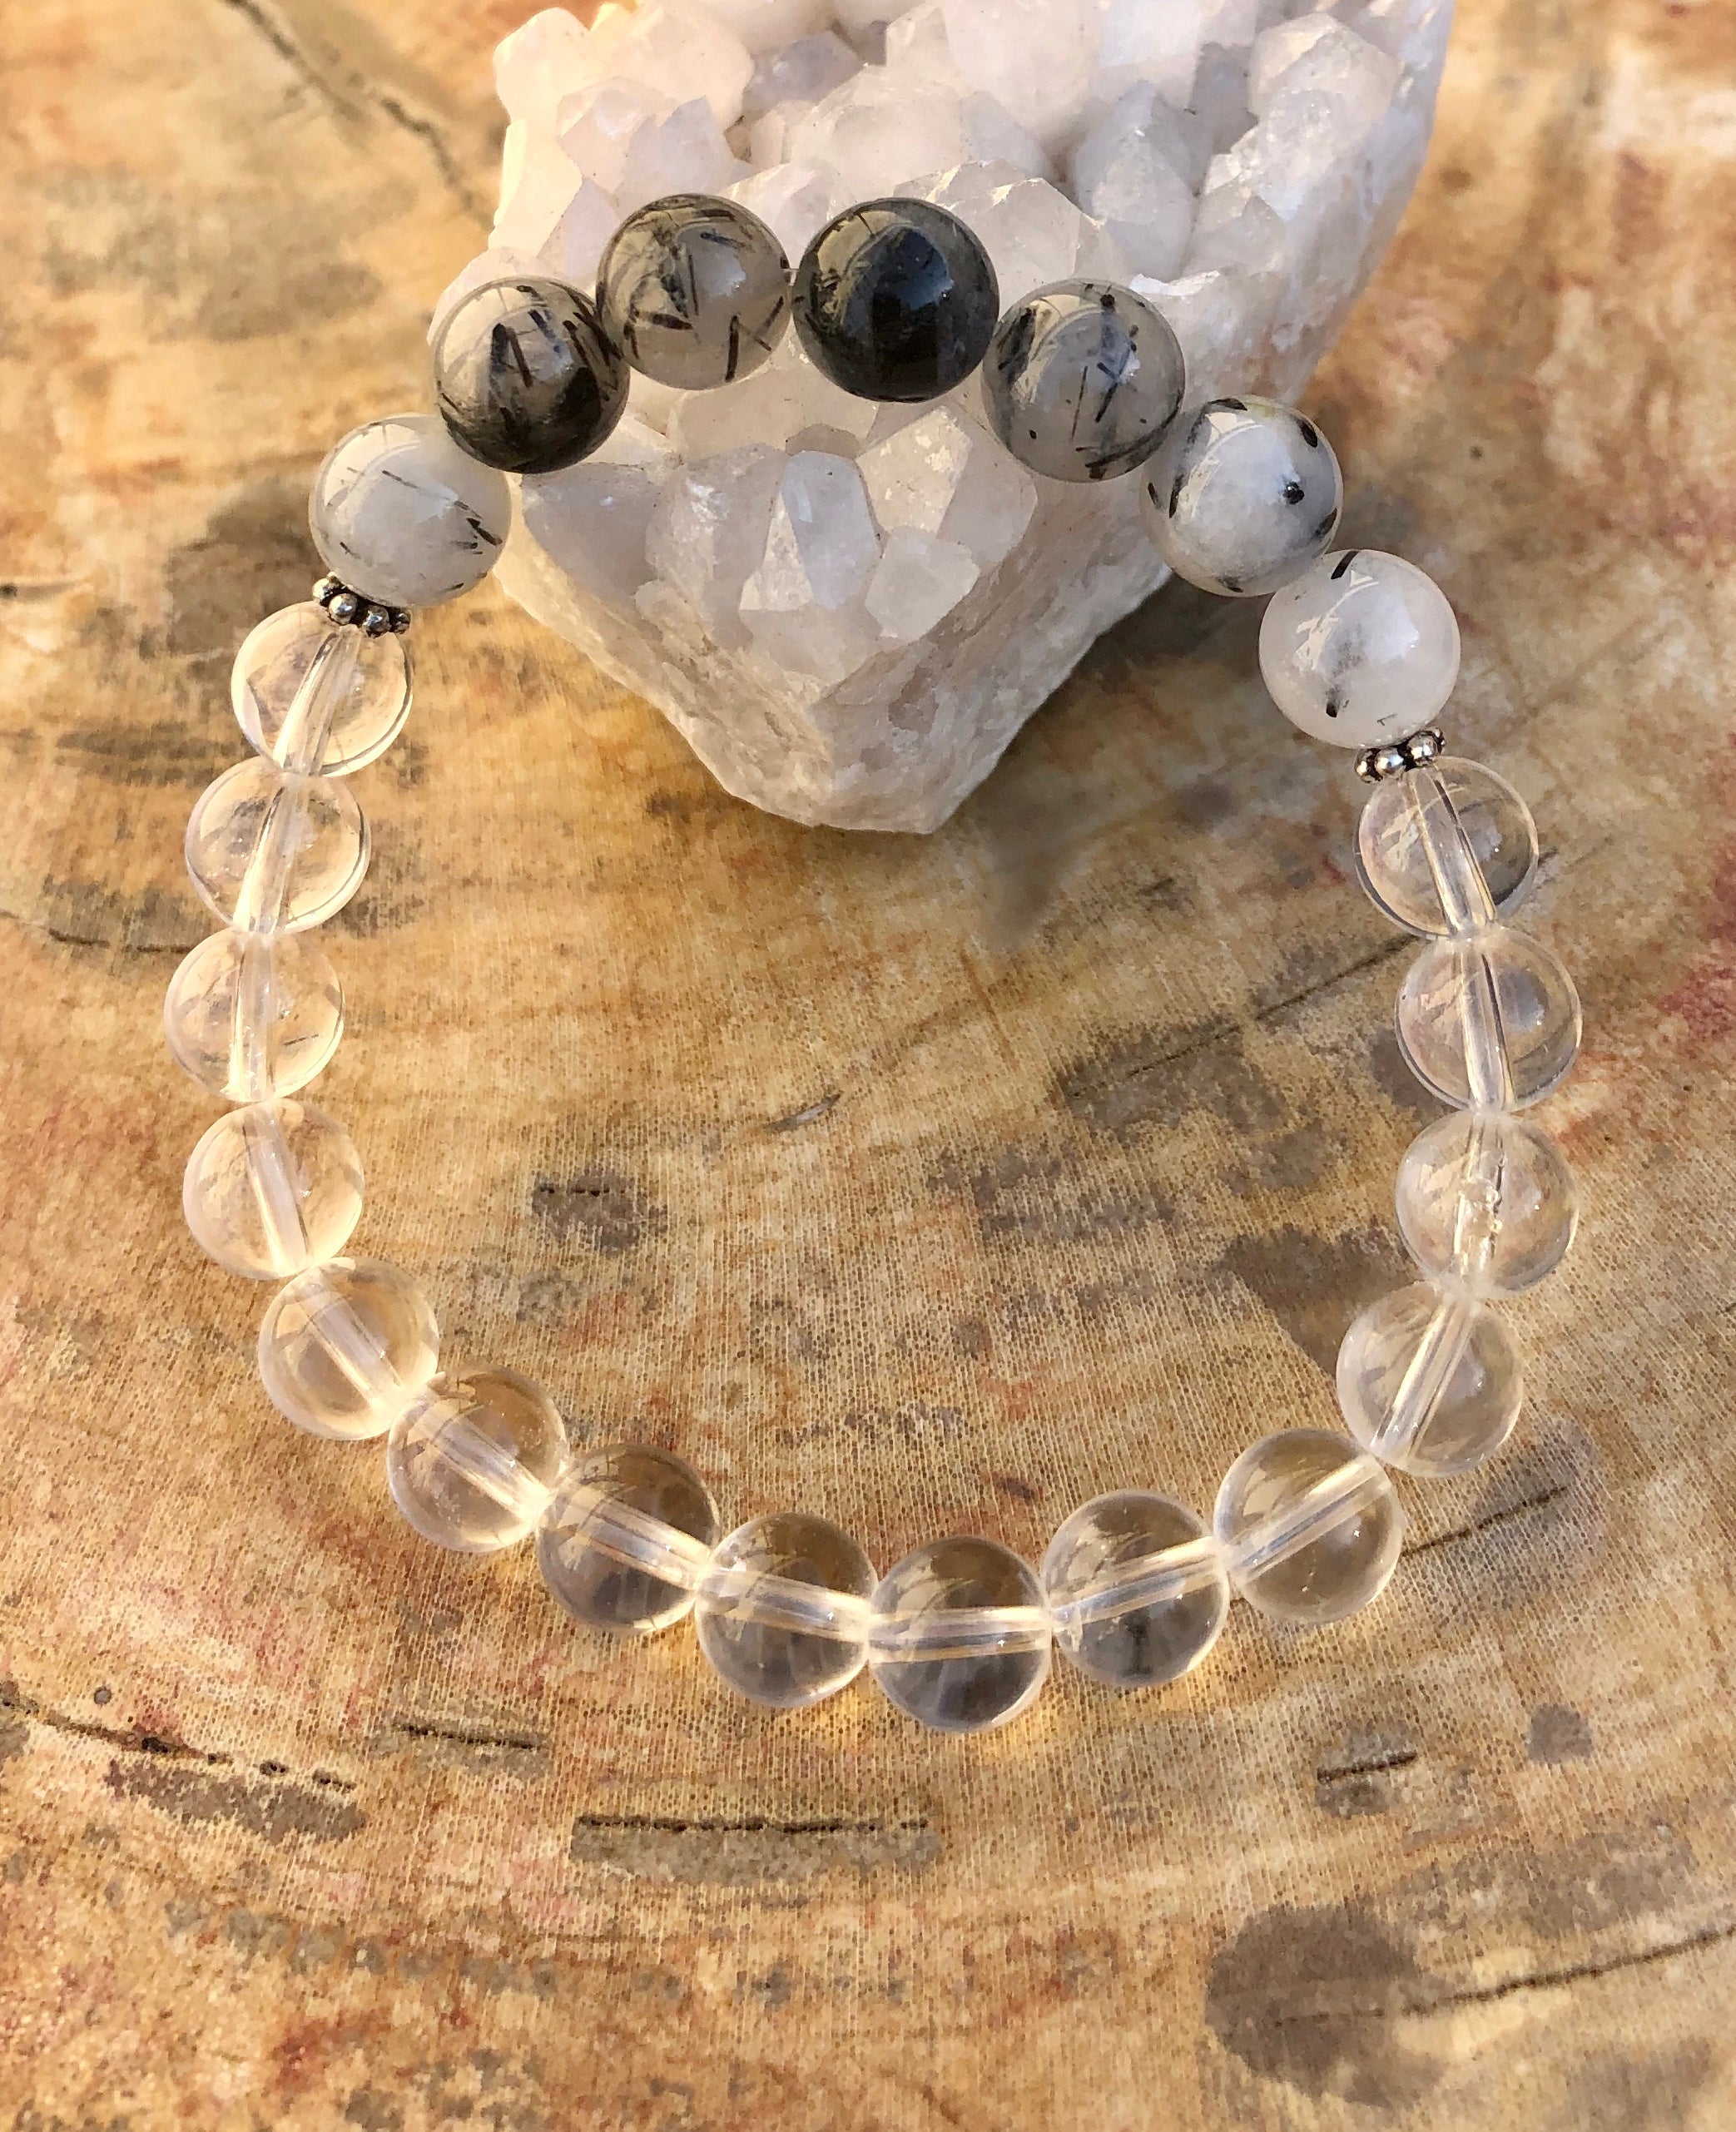 Black Tourmaline & Crystal Quartz Bracelet - All-Natural Protection & Healing Stone Bijou Her